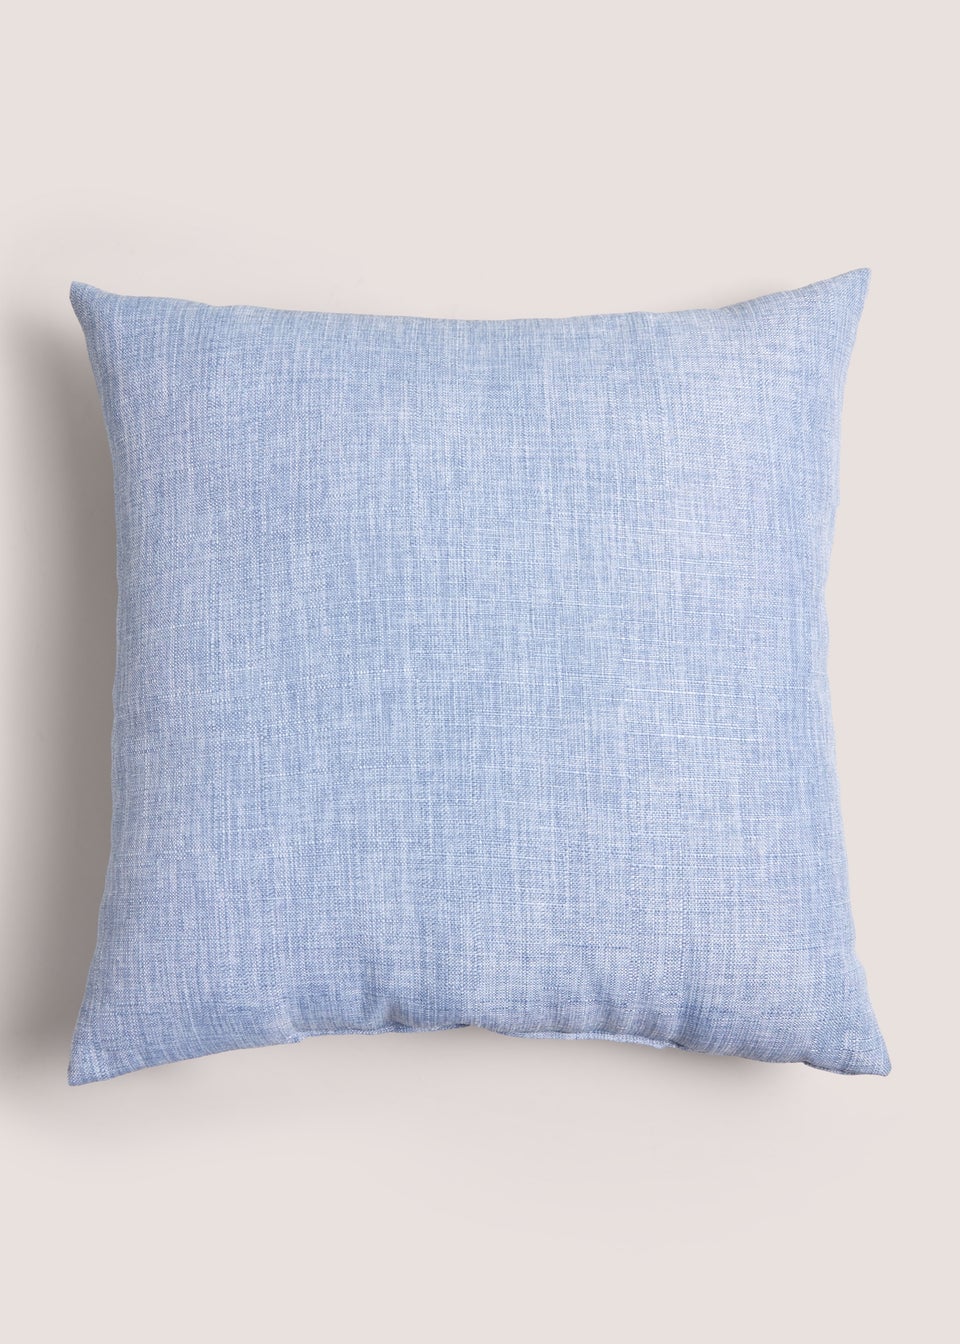 Blue Linen-Look Cushion (43cm x 43cm)